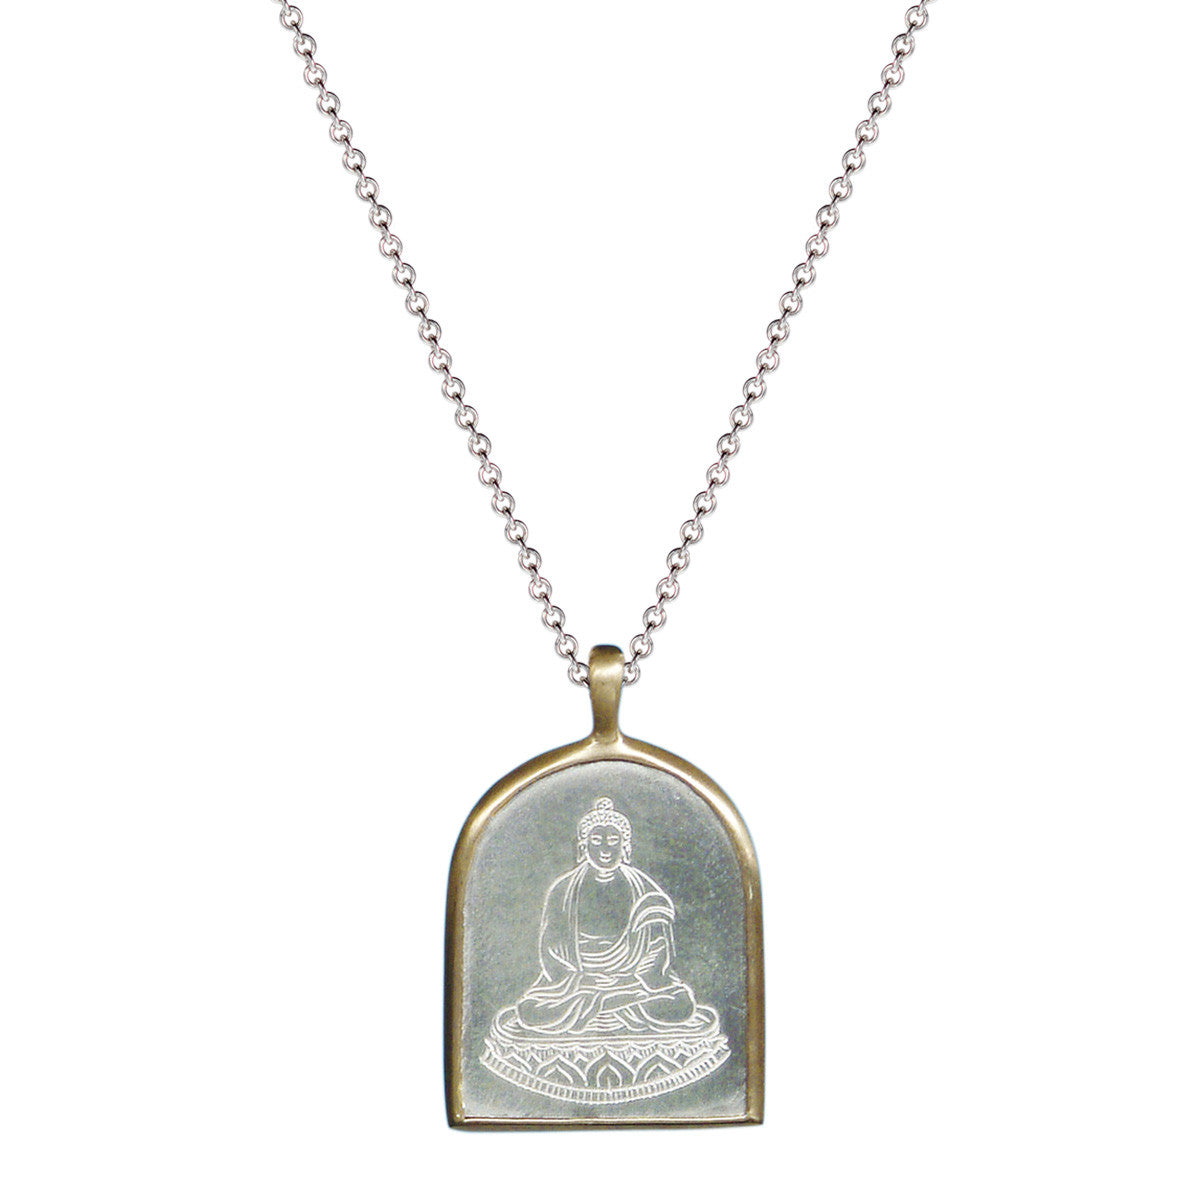 Mens 14K Gold Plated Cz Green Jade Mini Buddha Pendant & Chain Necklace Set  | eBay